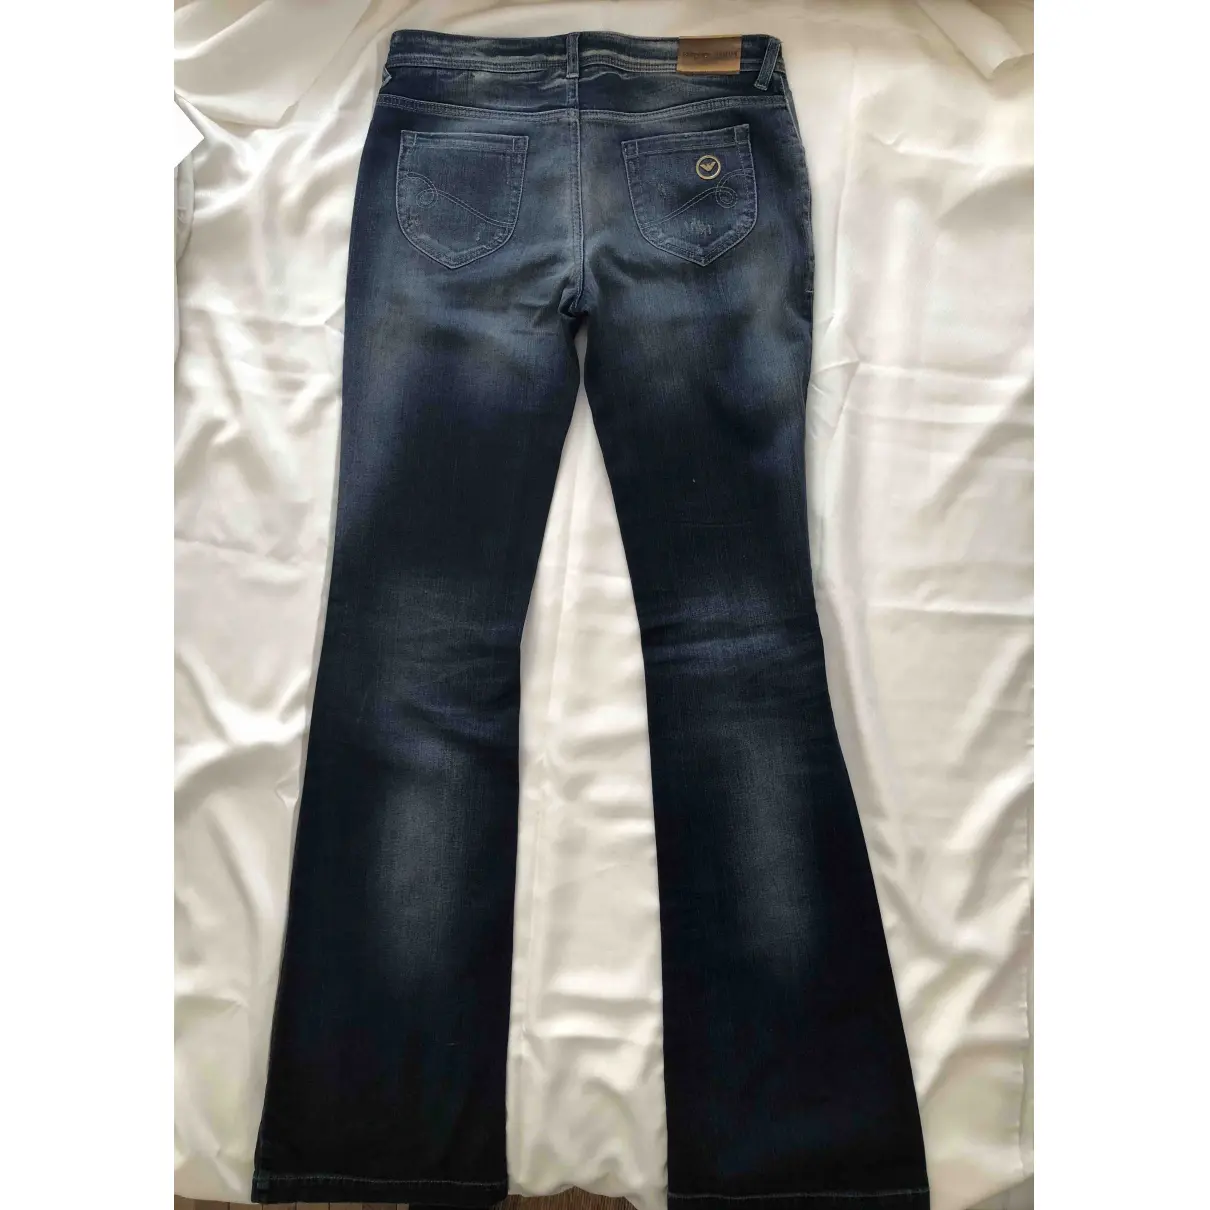 Buy Armani Jeans Blue Cotton - elasthane Jeans online